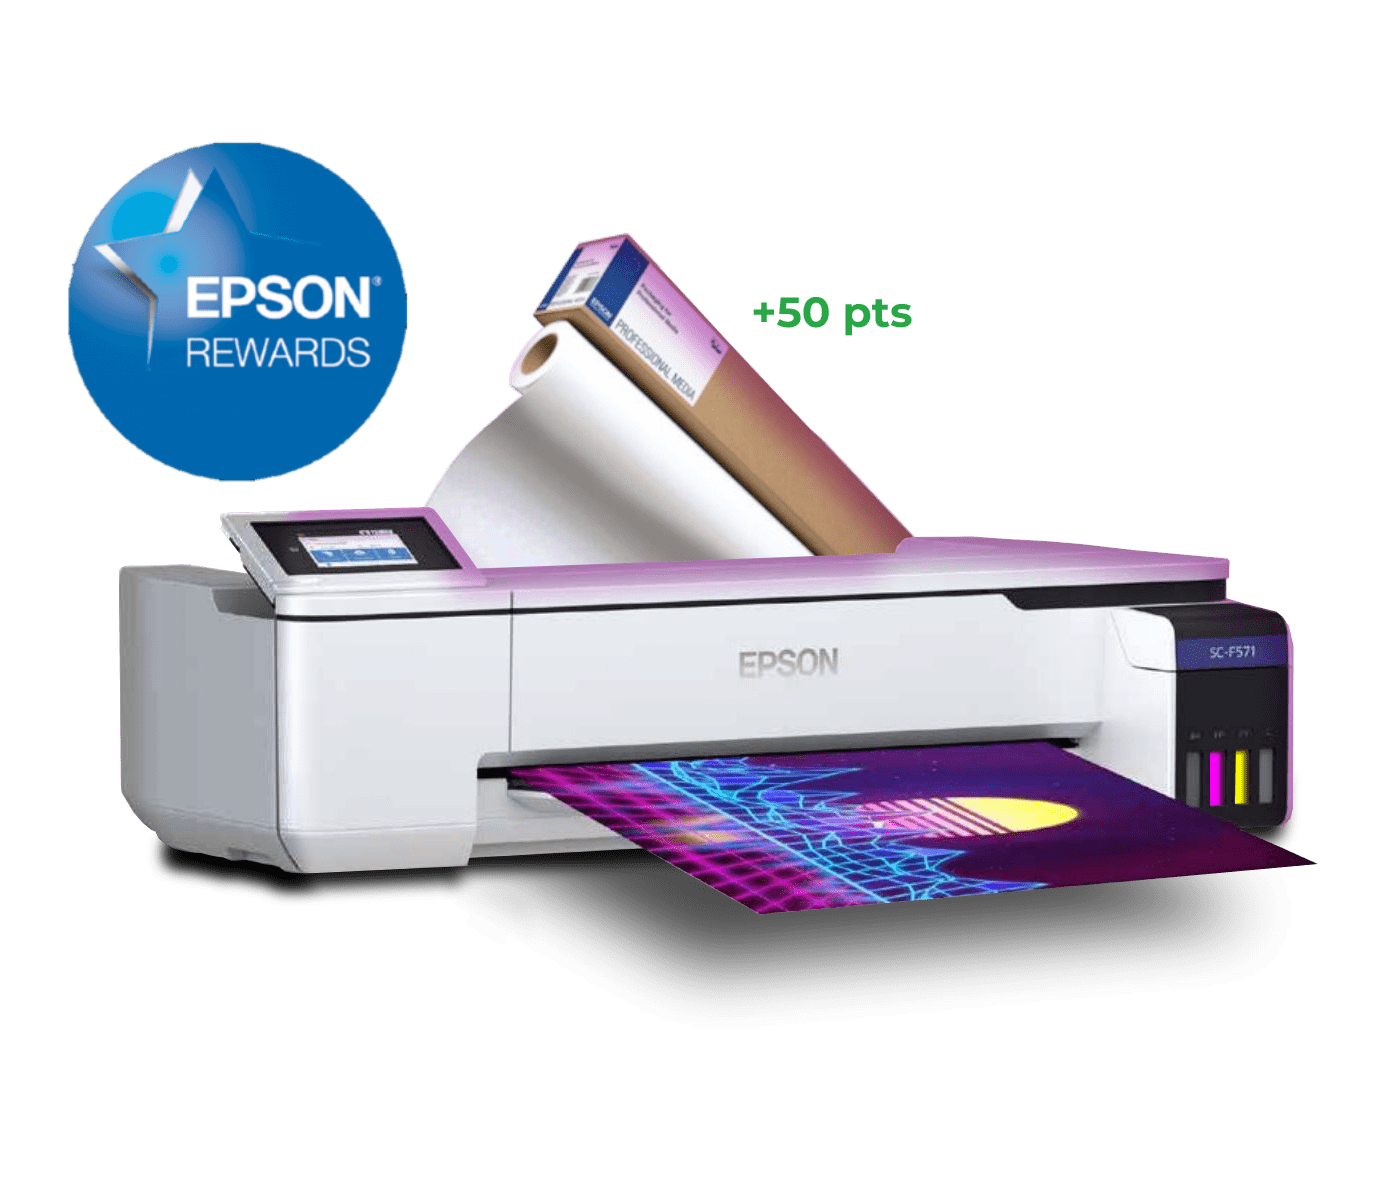 EPSON REWARD F571 siblimacion